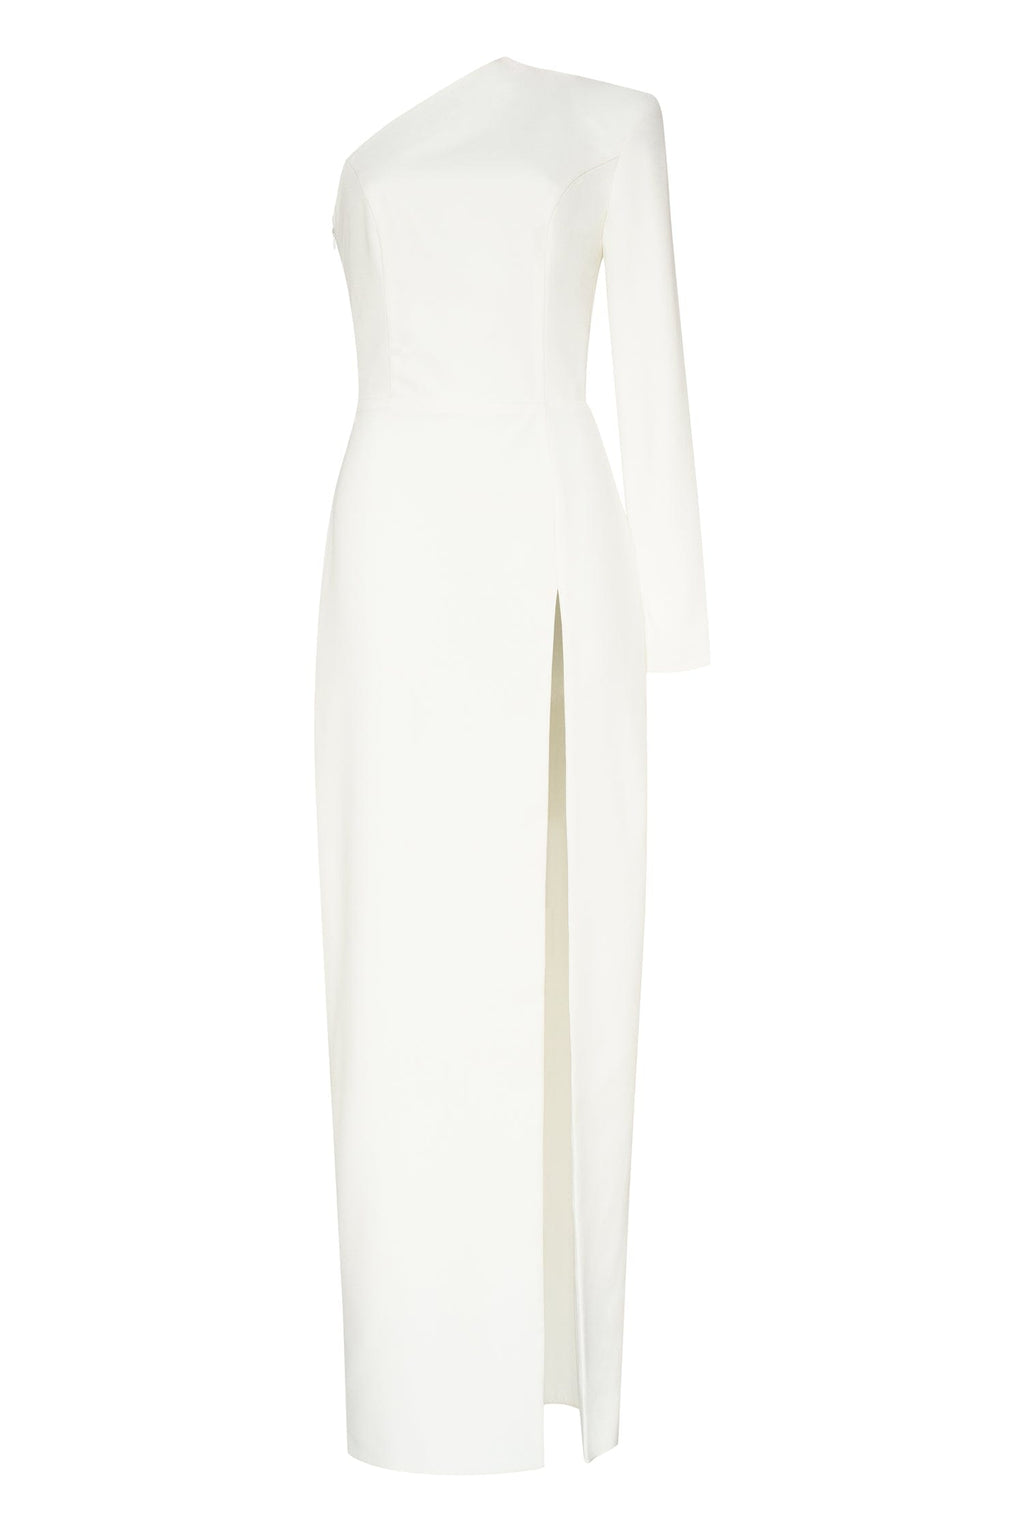 Vintage Bow Tie Maxi Long White Dress Women Lantern Sleeve Elegant Bandage  Dress | eBay